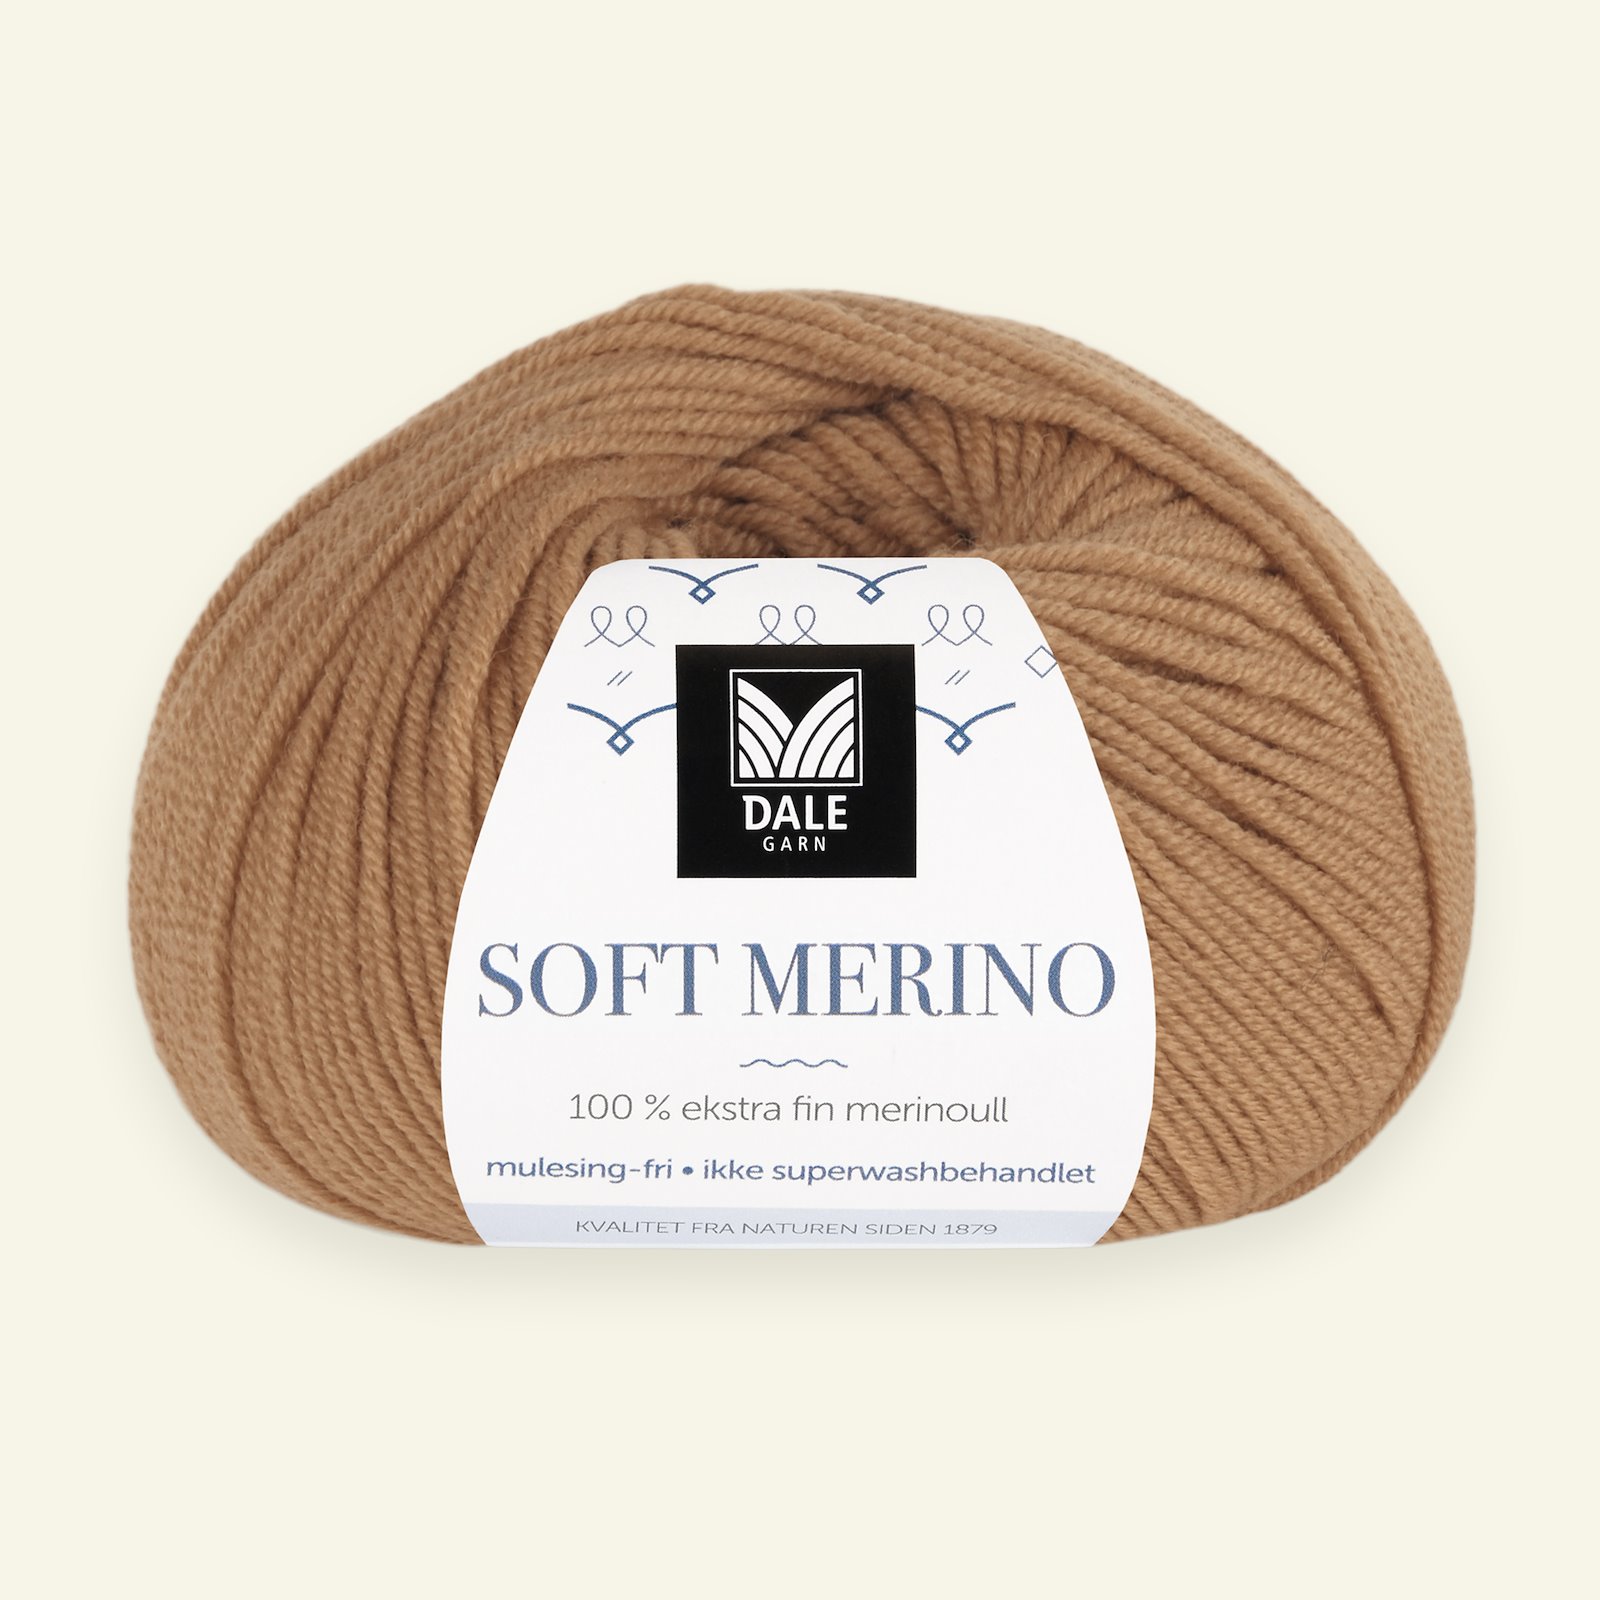 Dale Garn, 100% extra fine merino wool yarn, "Soft Merino", caramel (3016) 90000337_pack